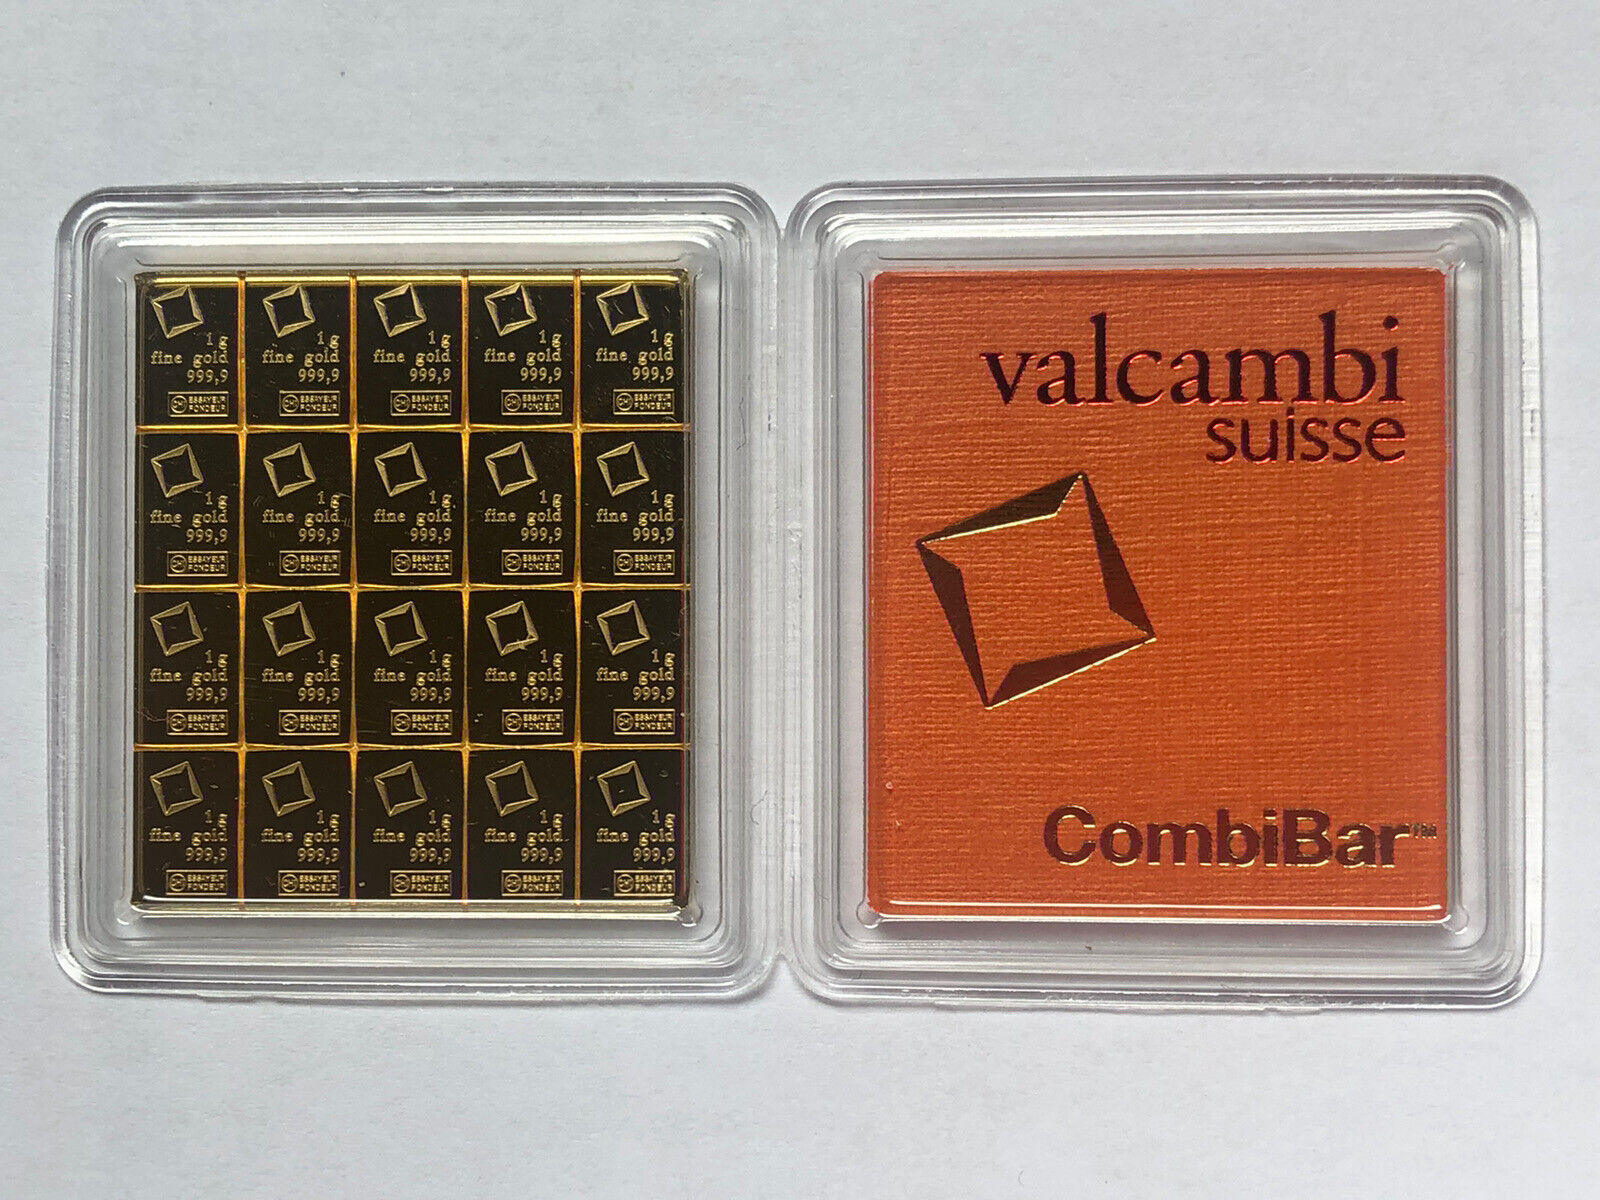 1 GRAM GOLD AND 10 GRAMS SILVER 999 FINE VALCAMBI SUISSE BULLION Goedkope hoge kwaliteit